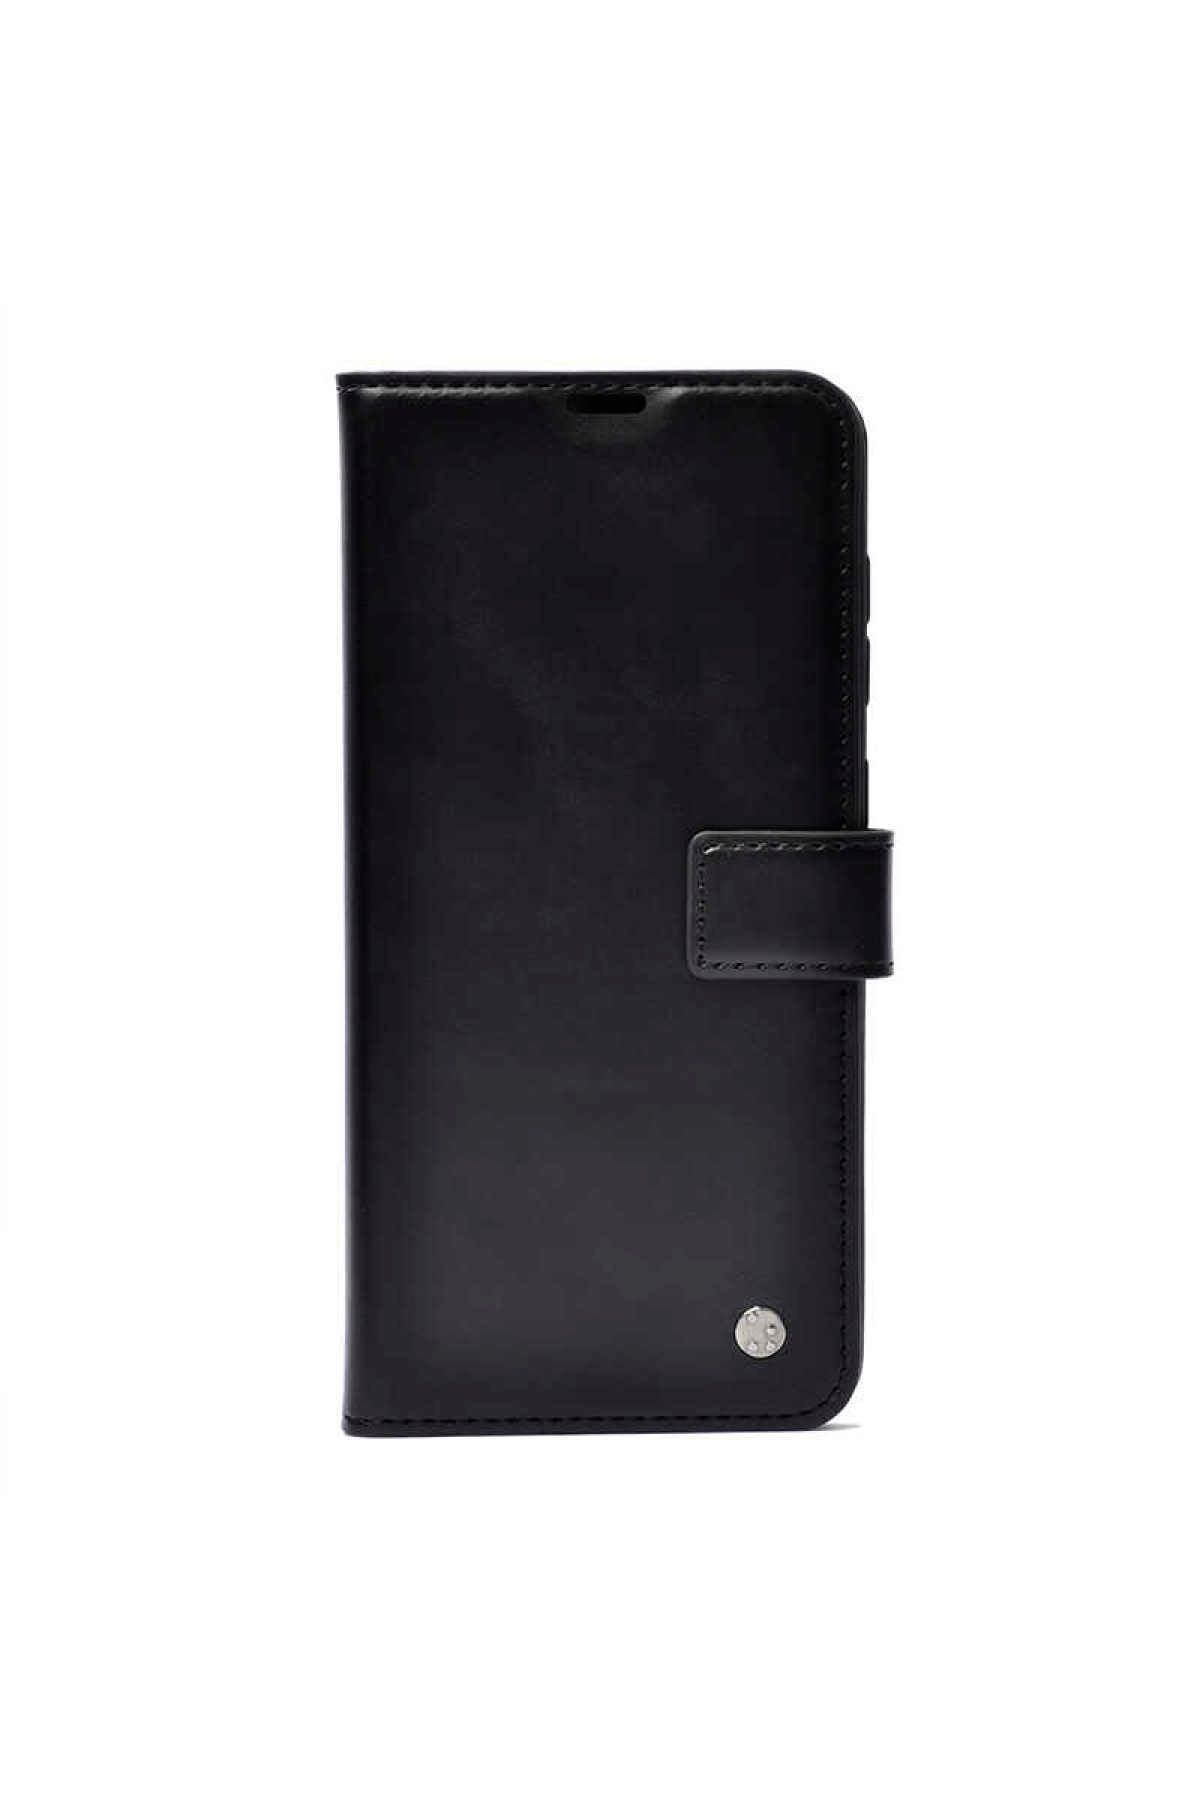 Mobilteam Samsung Galaxy A30 Kılıf Kapaklı Pocketdelux - Siyah